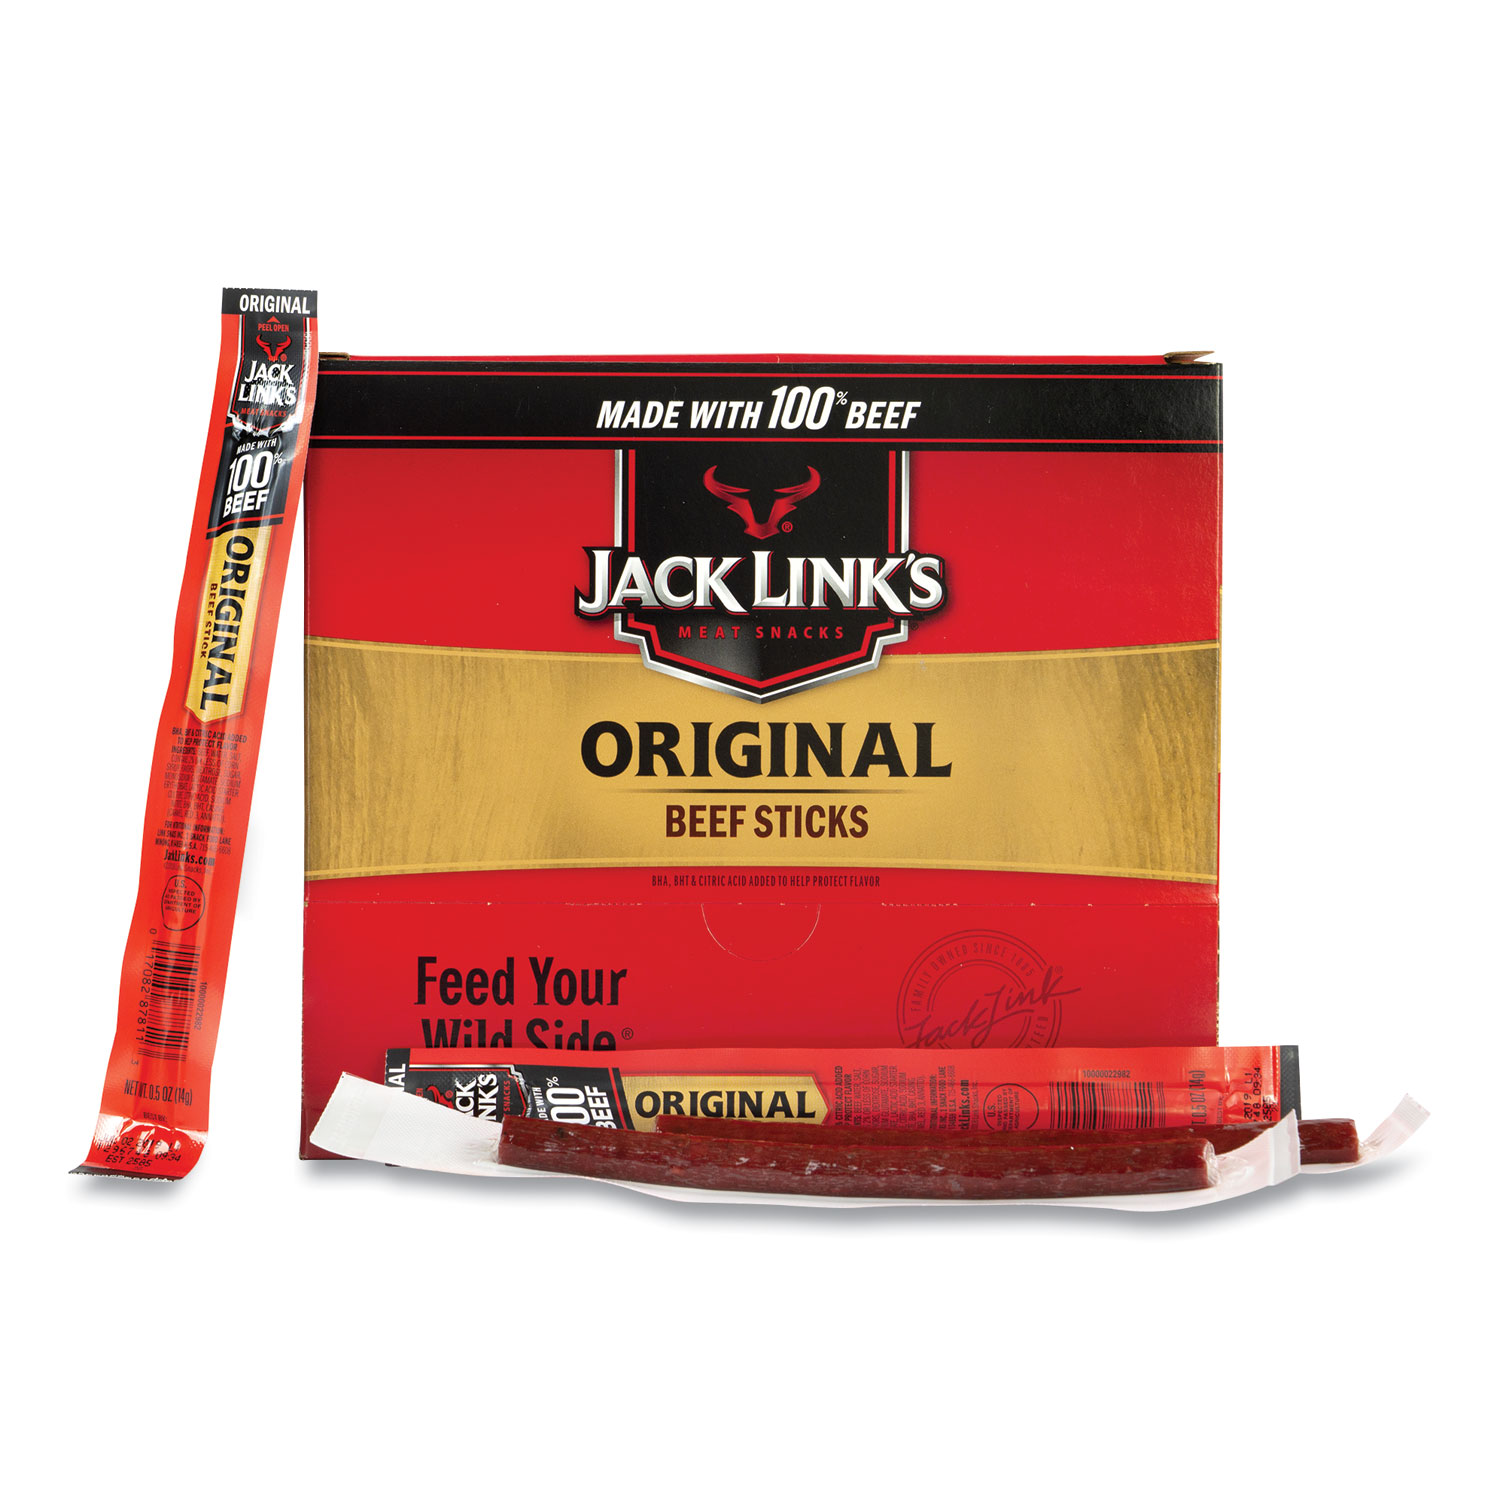  Jack Link’s 9359 Original Beef Sticks, 0.5 oz Sticks, 50 Sticks/Box, Free Delivery in 1-4 Business Days (GRR27800003) 